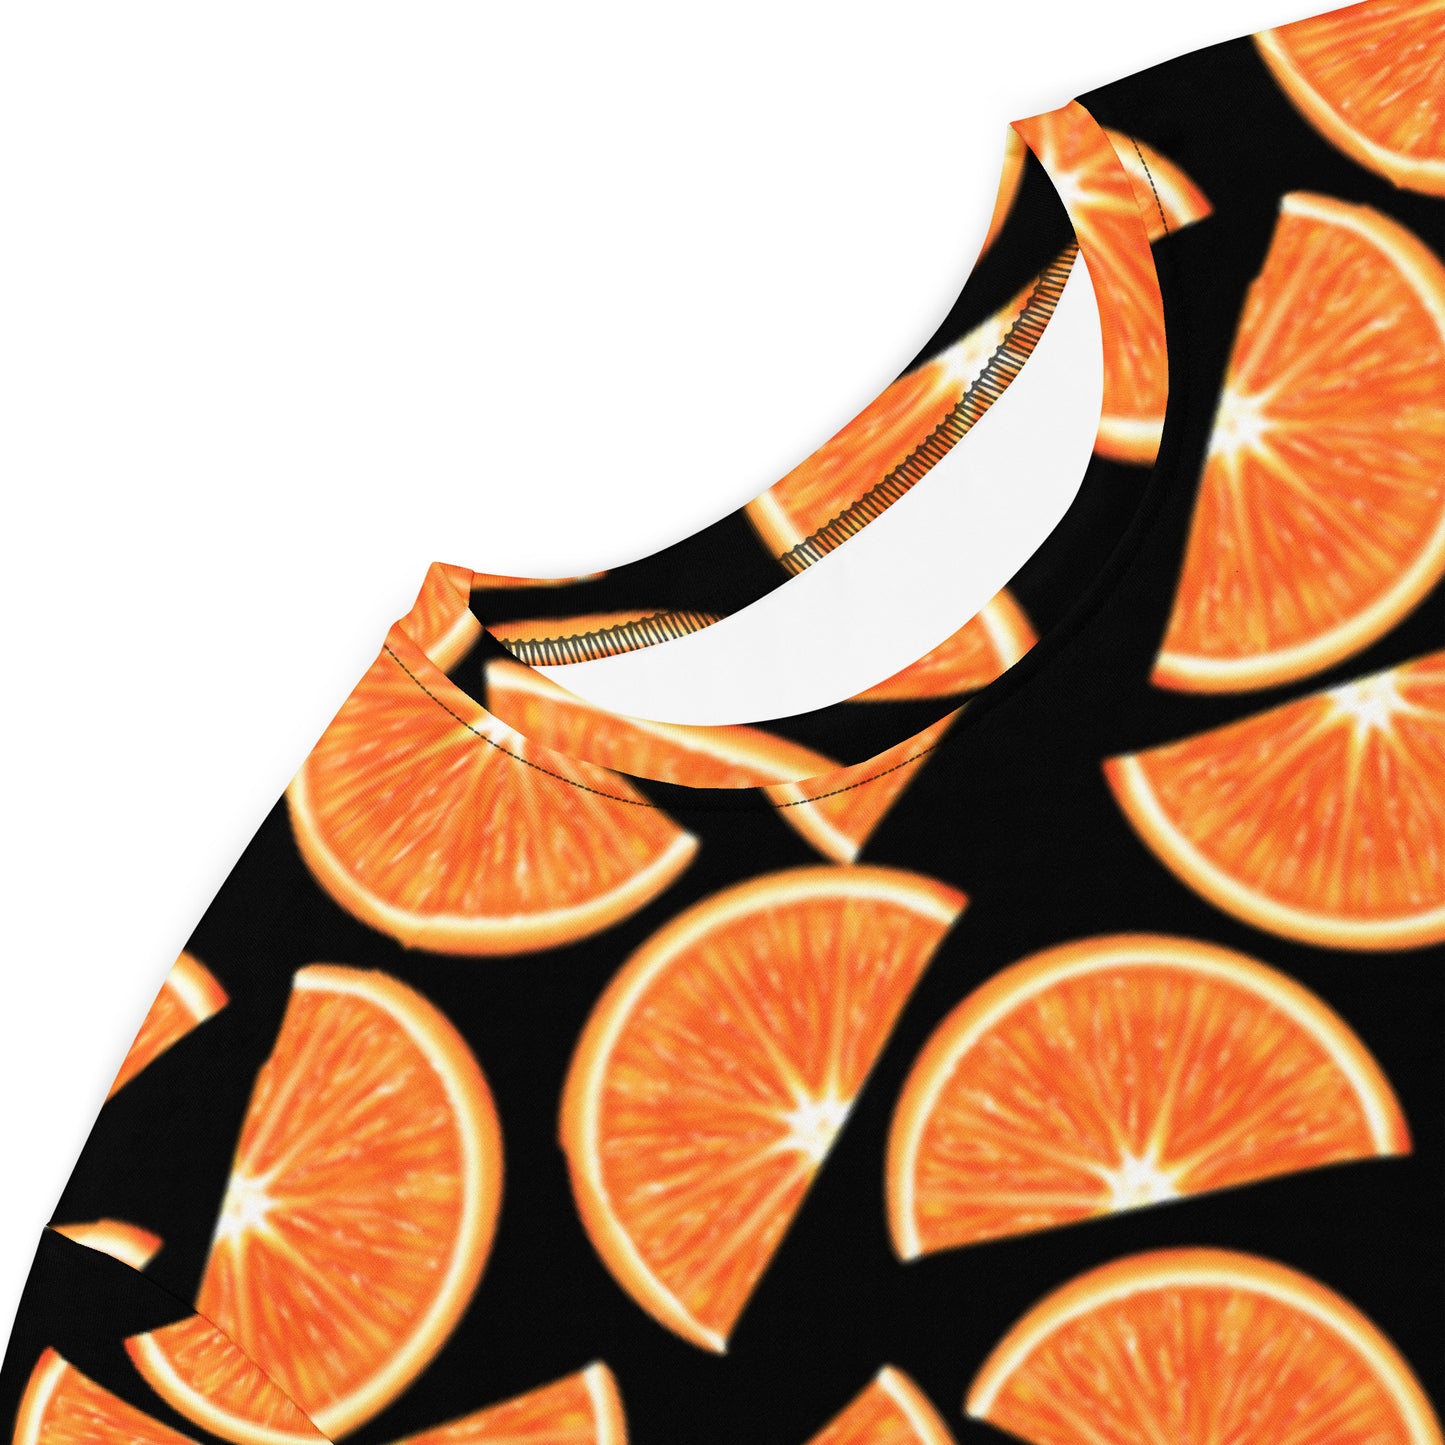 Orange Lover T-shirt Dress